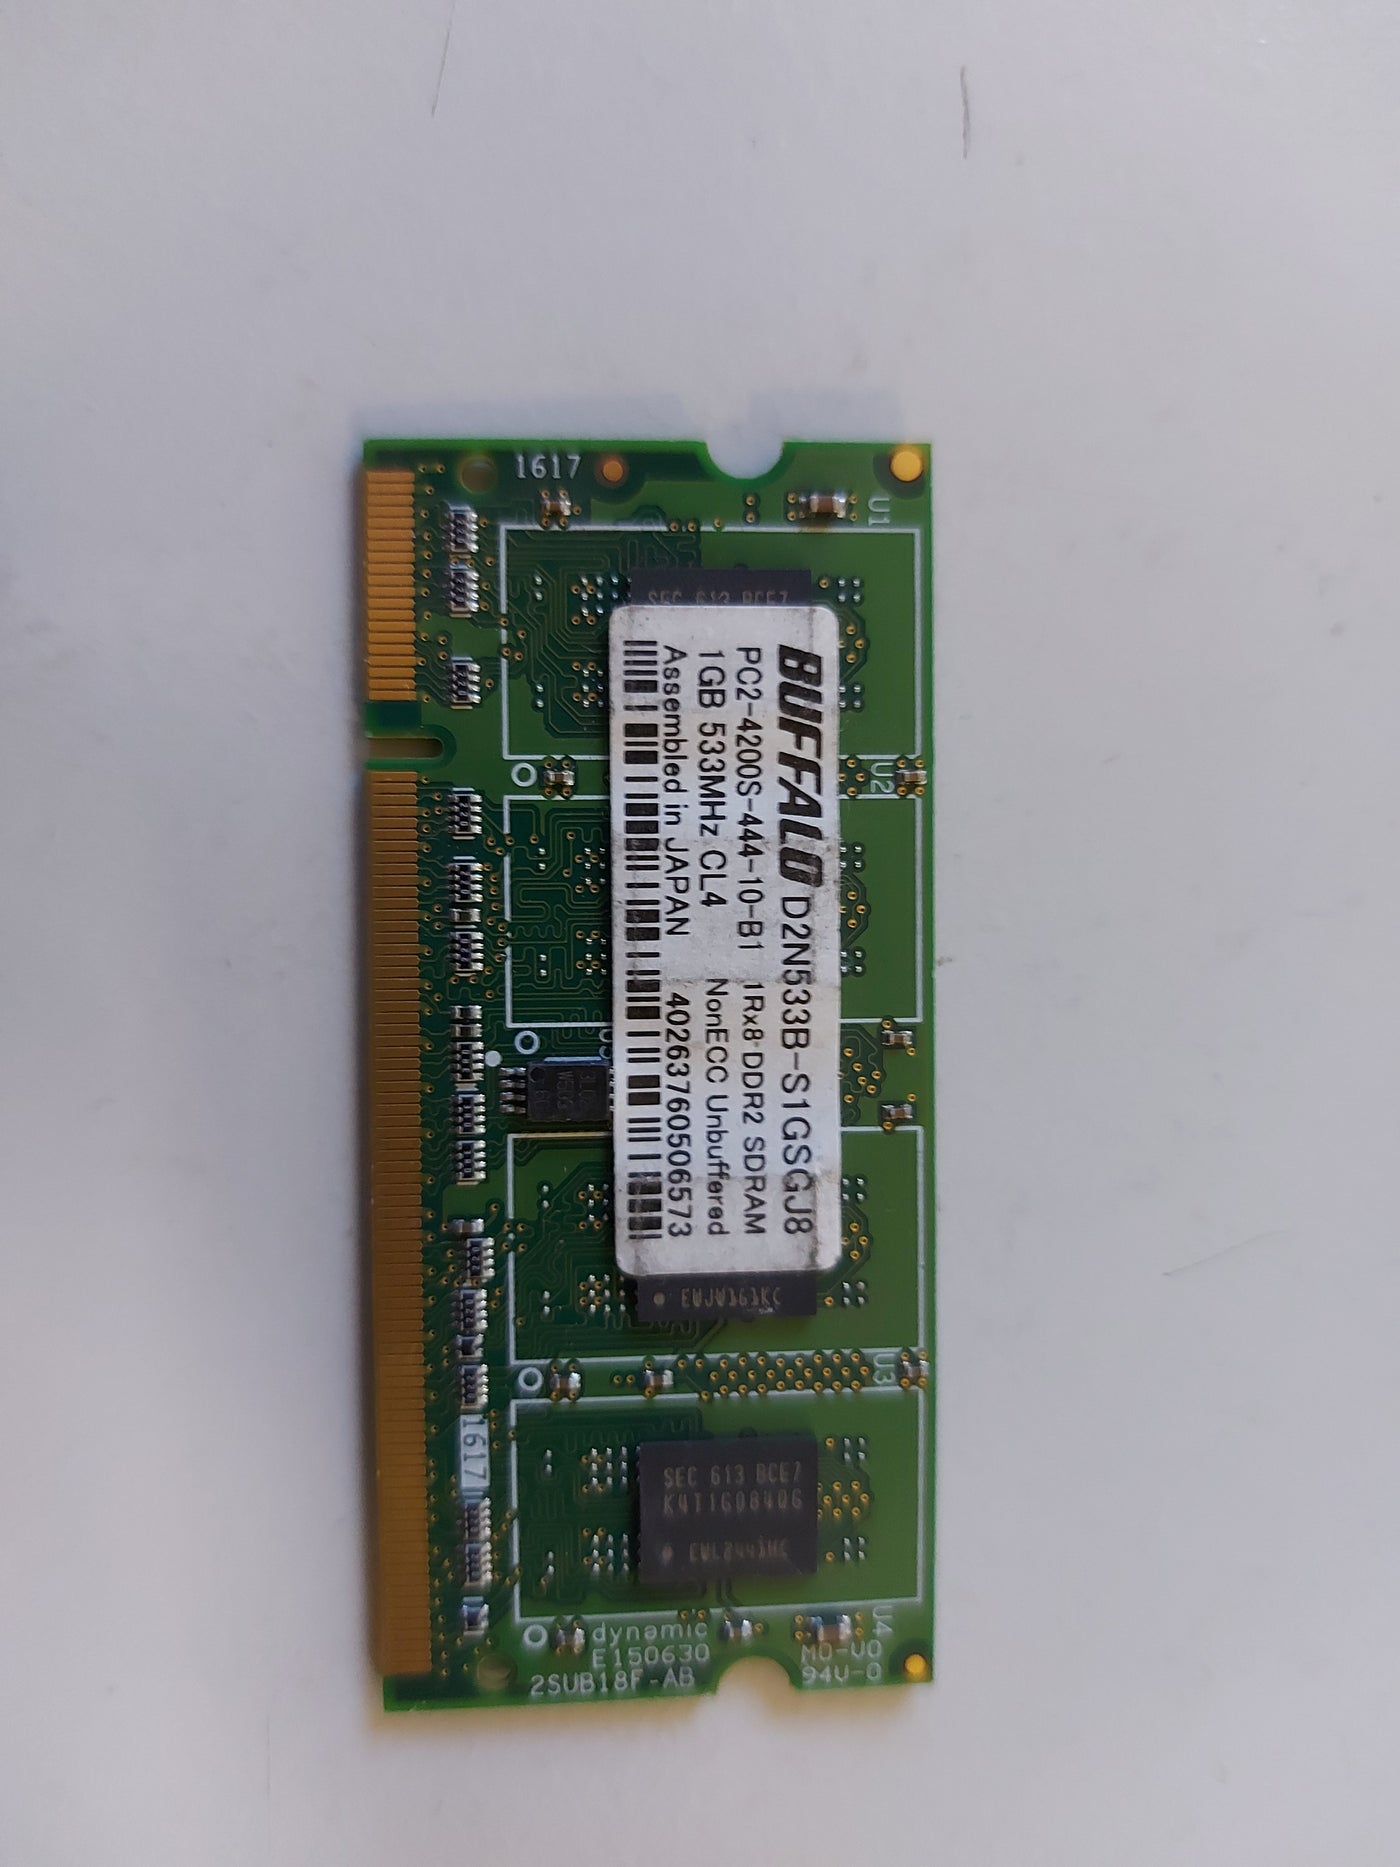 Buffalo 1GB PC2-4200 NonECC Unbuffered CL4 DDR2 SDRAM SODIMM D2N533B-S1GSGJ8